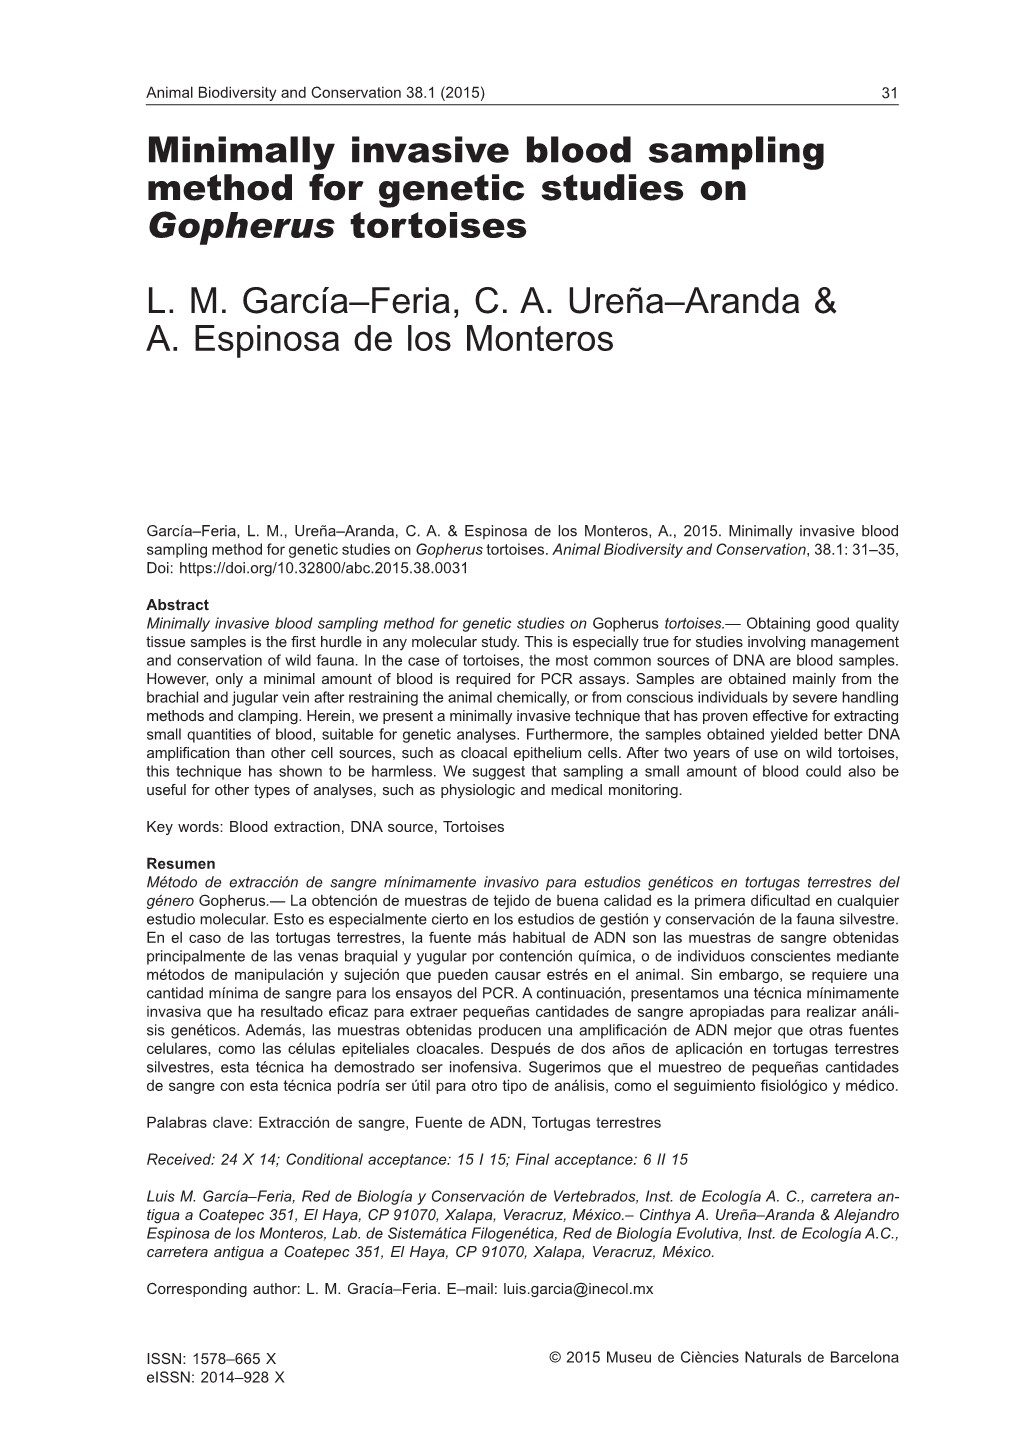 Minimally Invasive Blood Sampling Method for Genetic Studies on Gopherus Tortoises